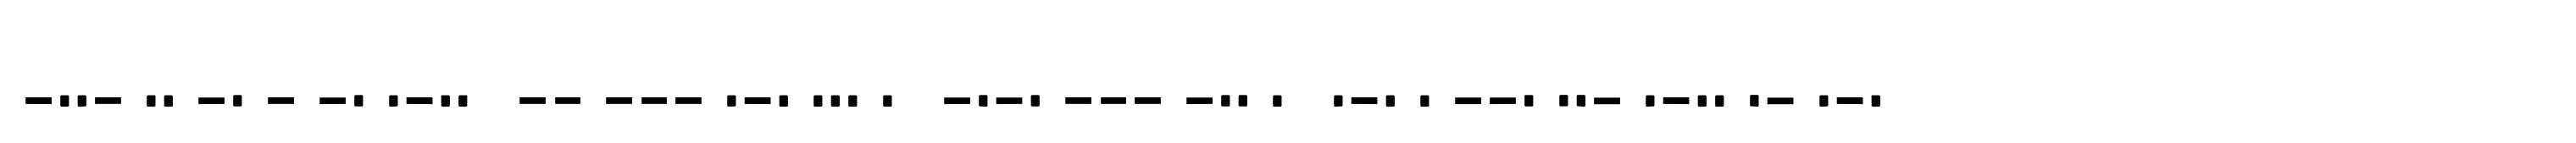 XIntnl Morse Code Regular